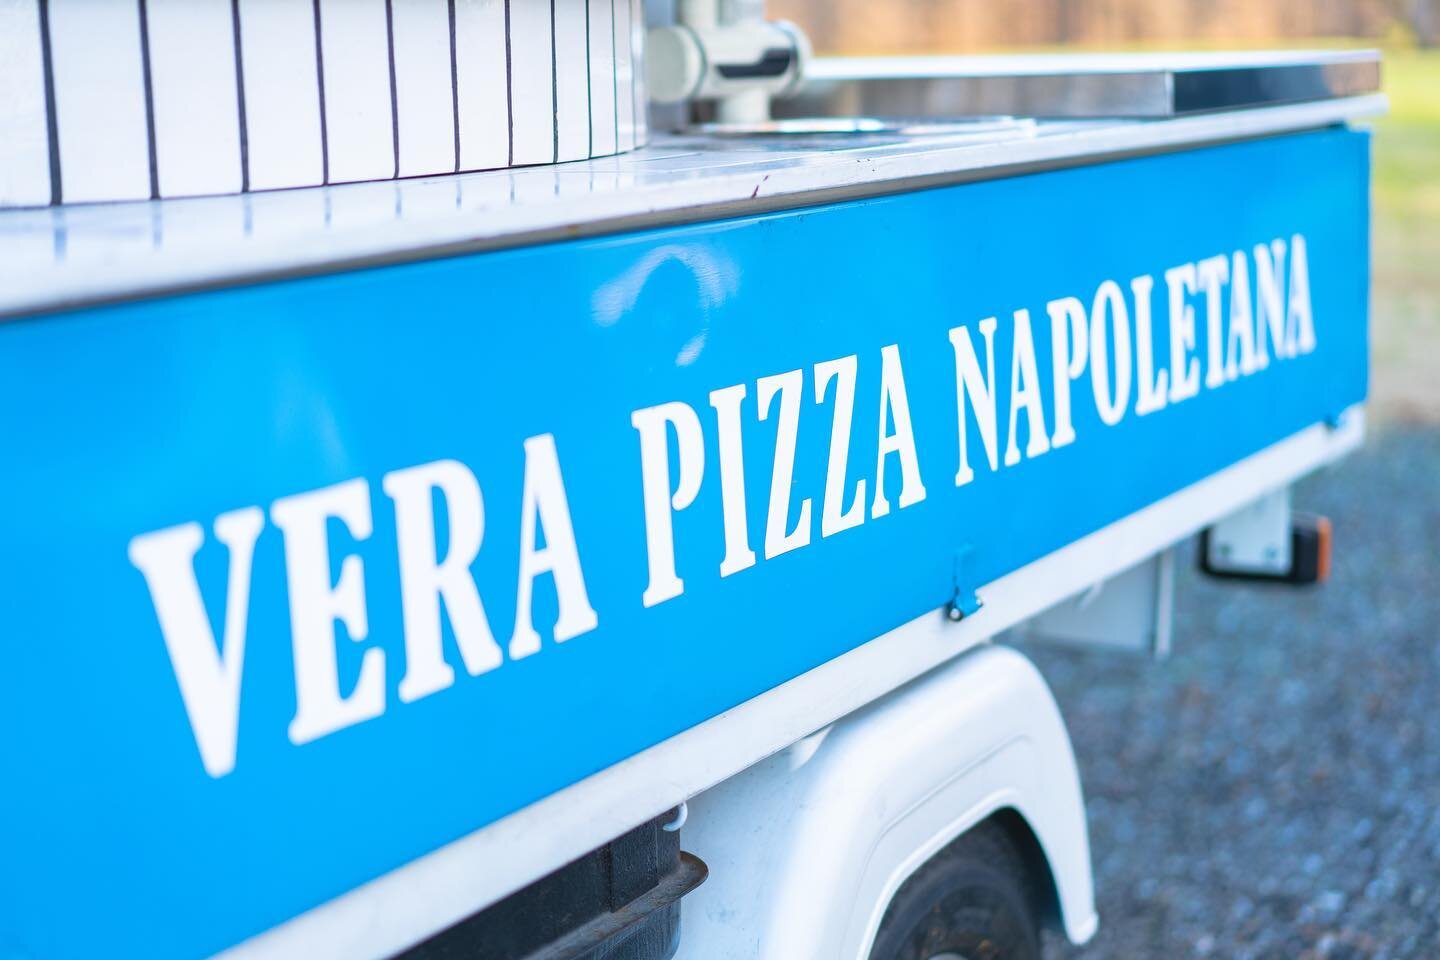 That what she said

#neapolitanpizza #verapizza #woodfire #brickovenpizza #cheesepizza #pepperonipizza #pizza #pizzalover @pizza #pizzapizzapizza #caputoflour #italianpizza #bestpizzaintown #foodporn #foodie #foodtrucks